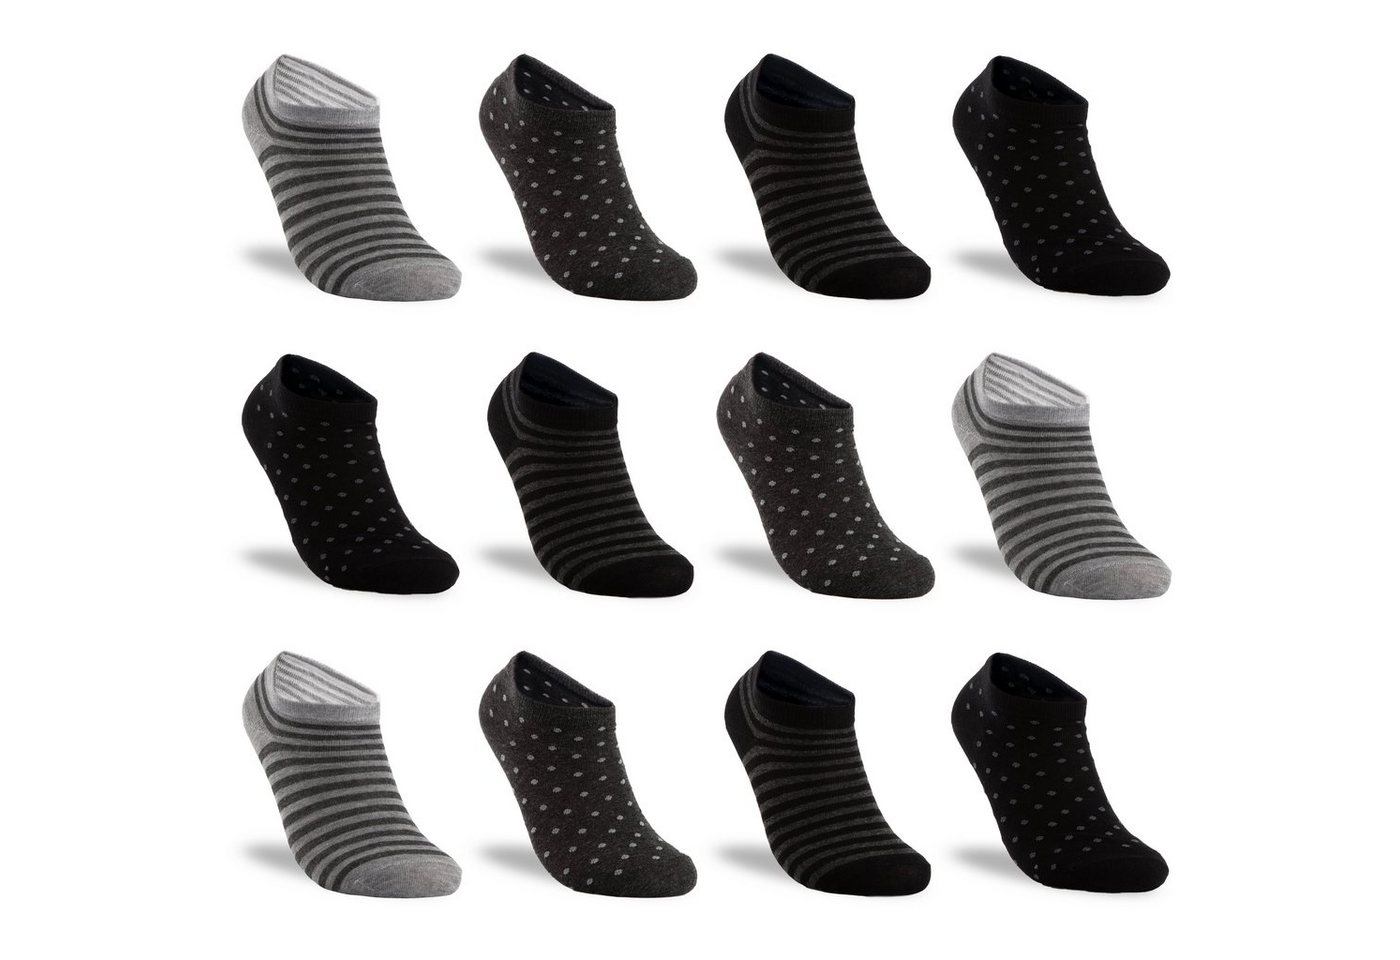 TEXEMP Sneakersocken 6, 12, 18 Paar Damen Sneaker Socken Kinder Baumwolle Freizeit Sport (Packung, 12-Paar) 90% Baumwolle von TEXEMP